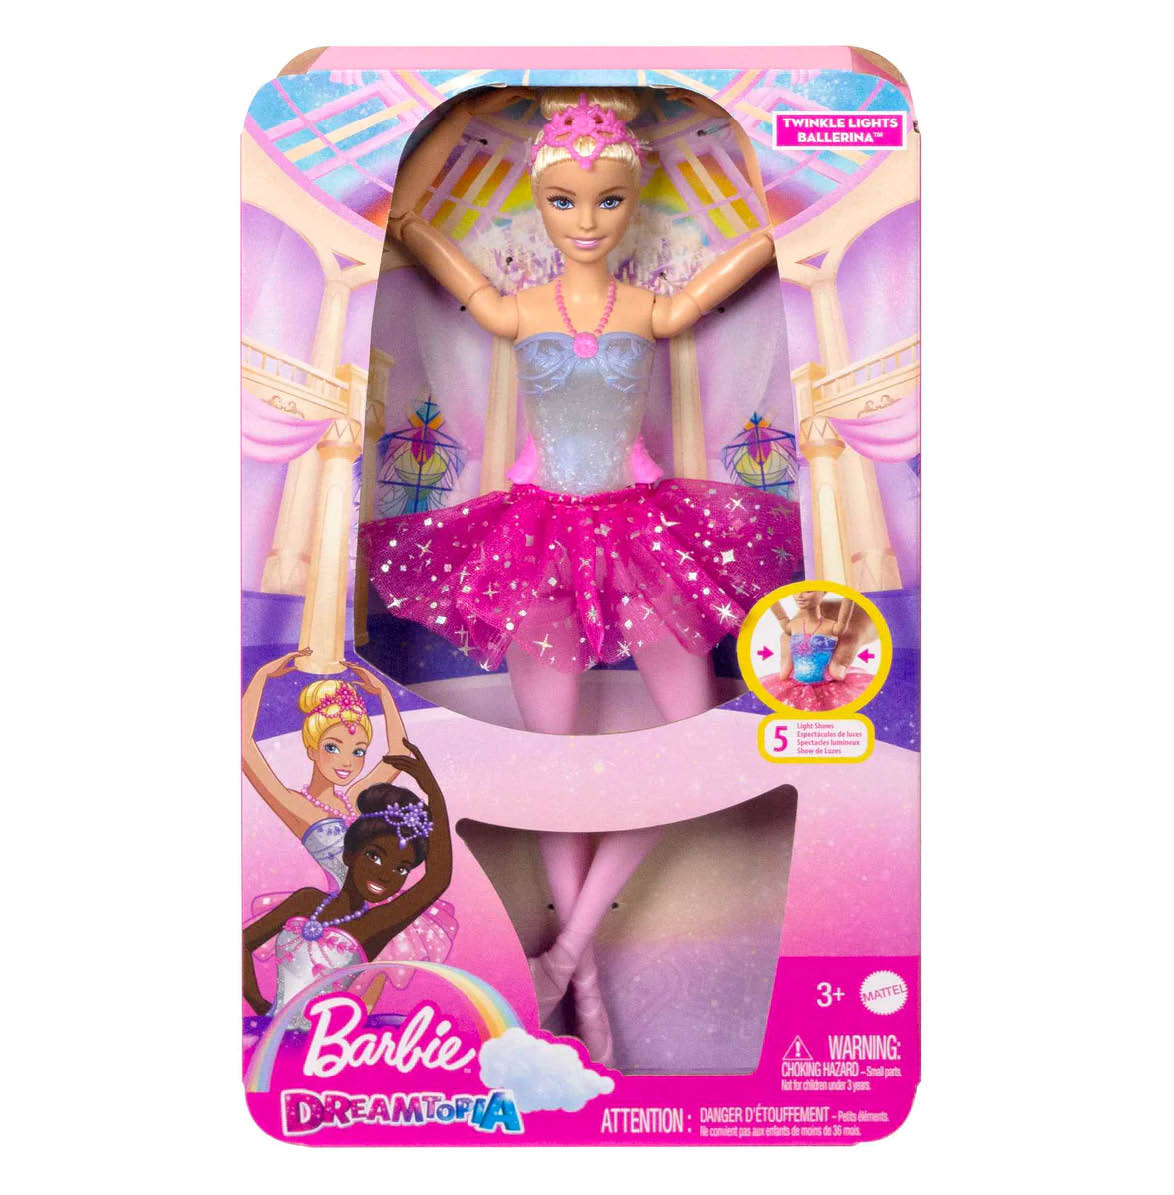 Barbie Dreamtopia Twinkle Lights Ballerina Doll in box